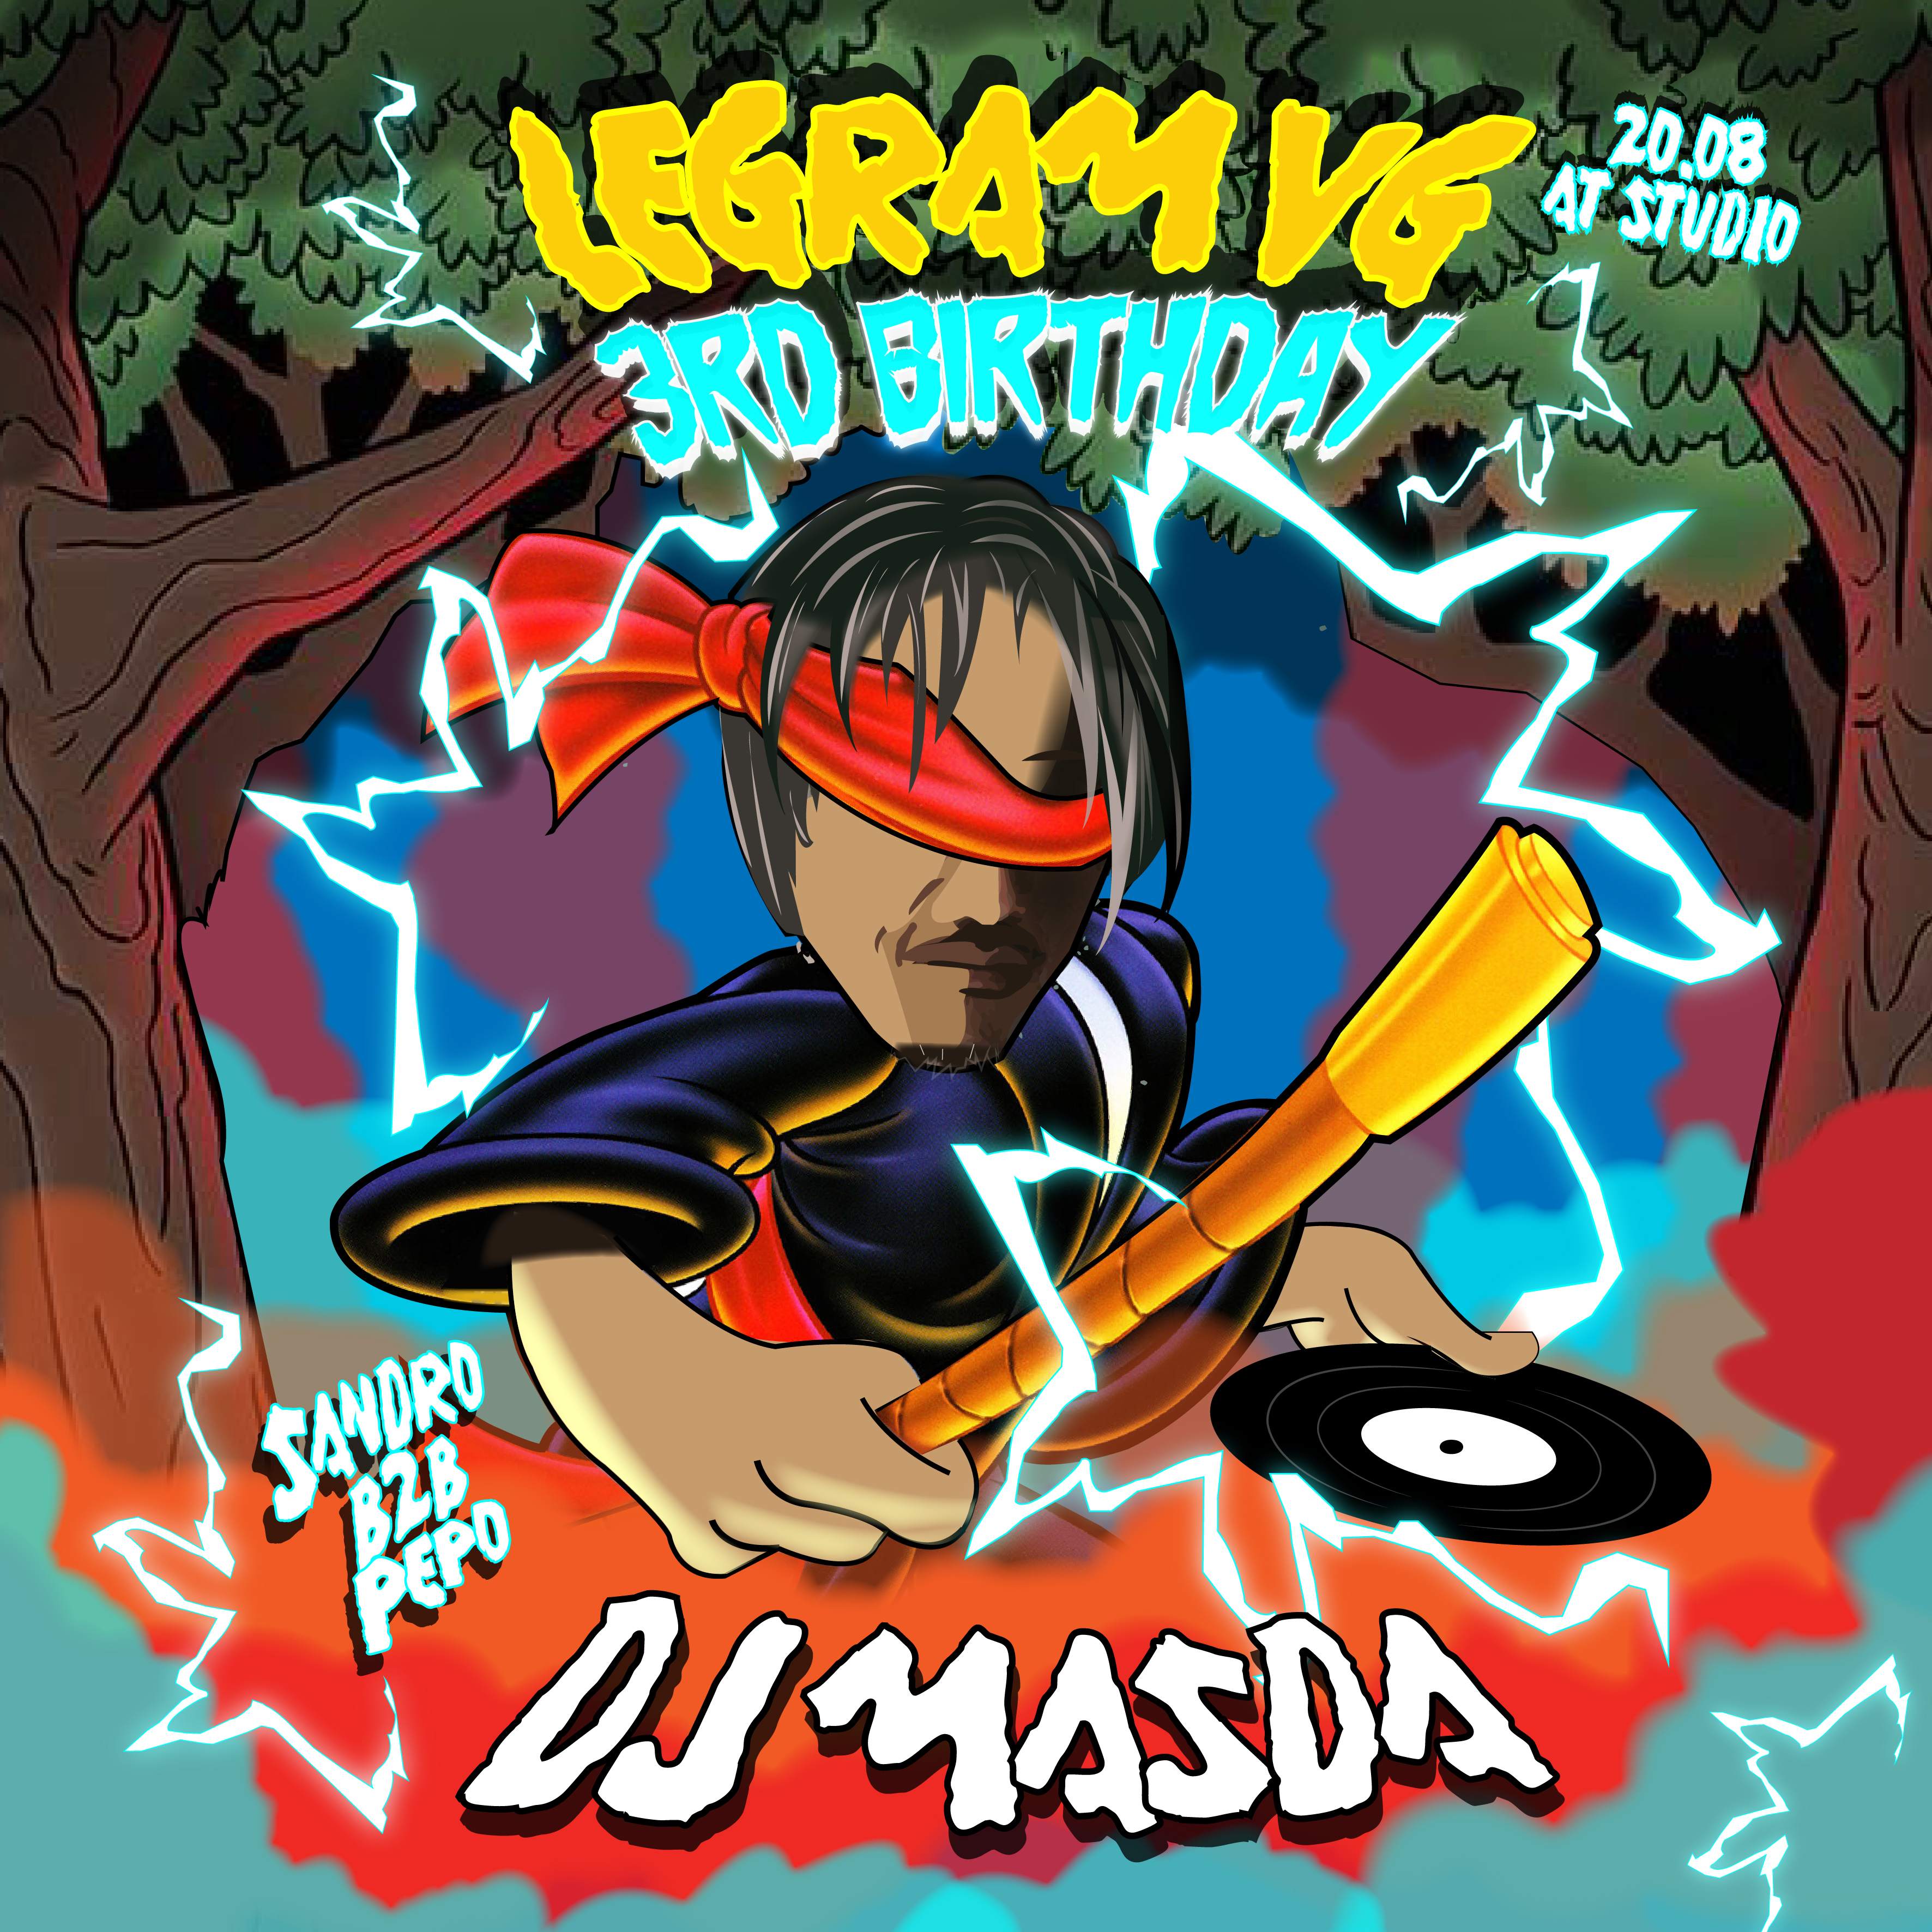 LEGRAM VG 3rd Birthday with DJ MASDA - フライヤー表